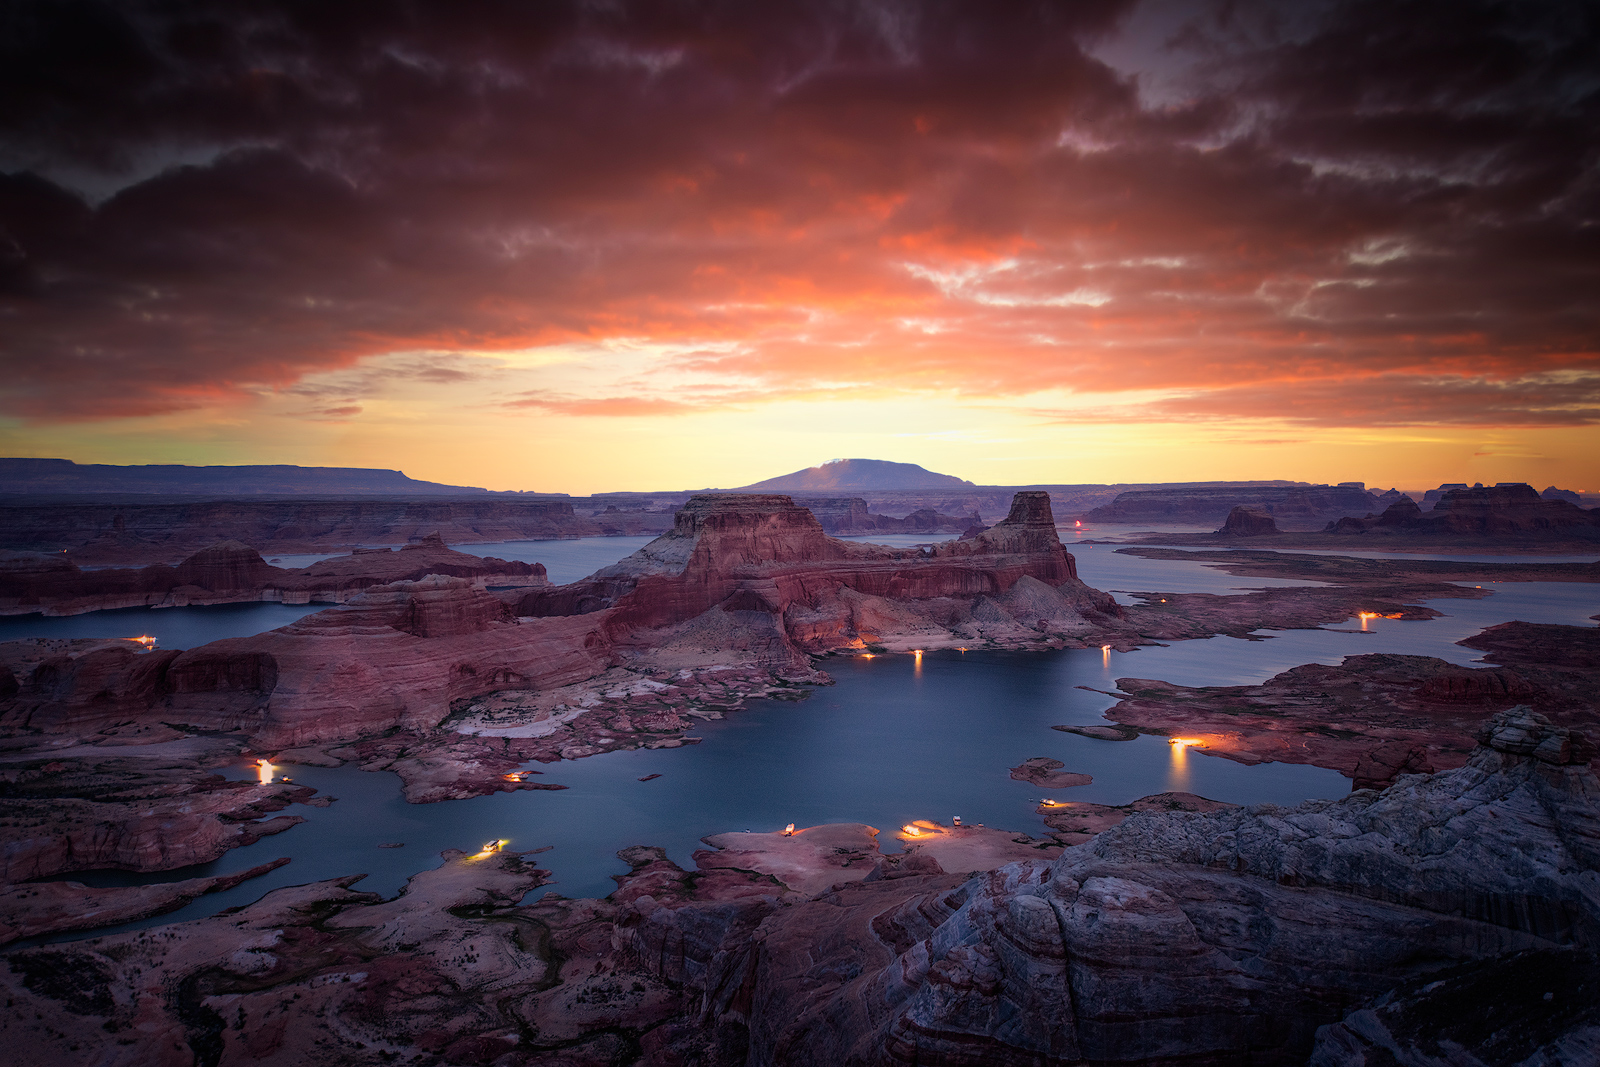 astrom point, utah, desert, lake powell, page, arizona, sunrise, red clouds, bernard chen, landscape photography